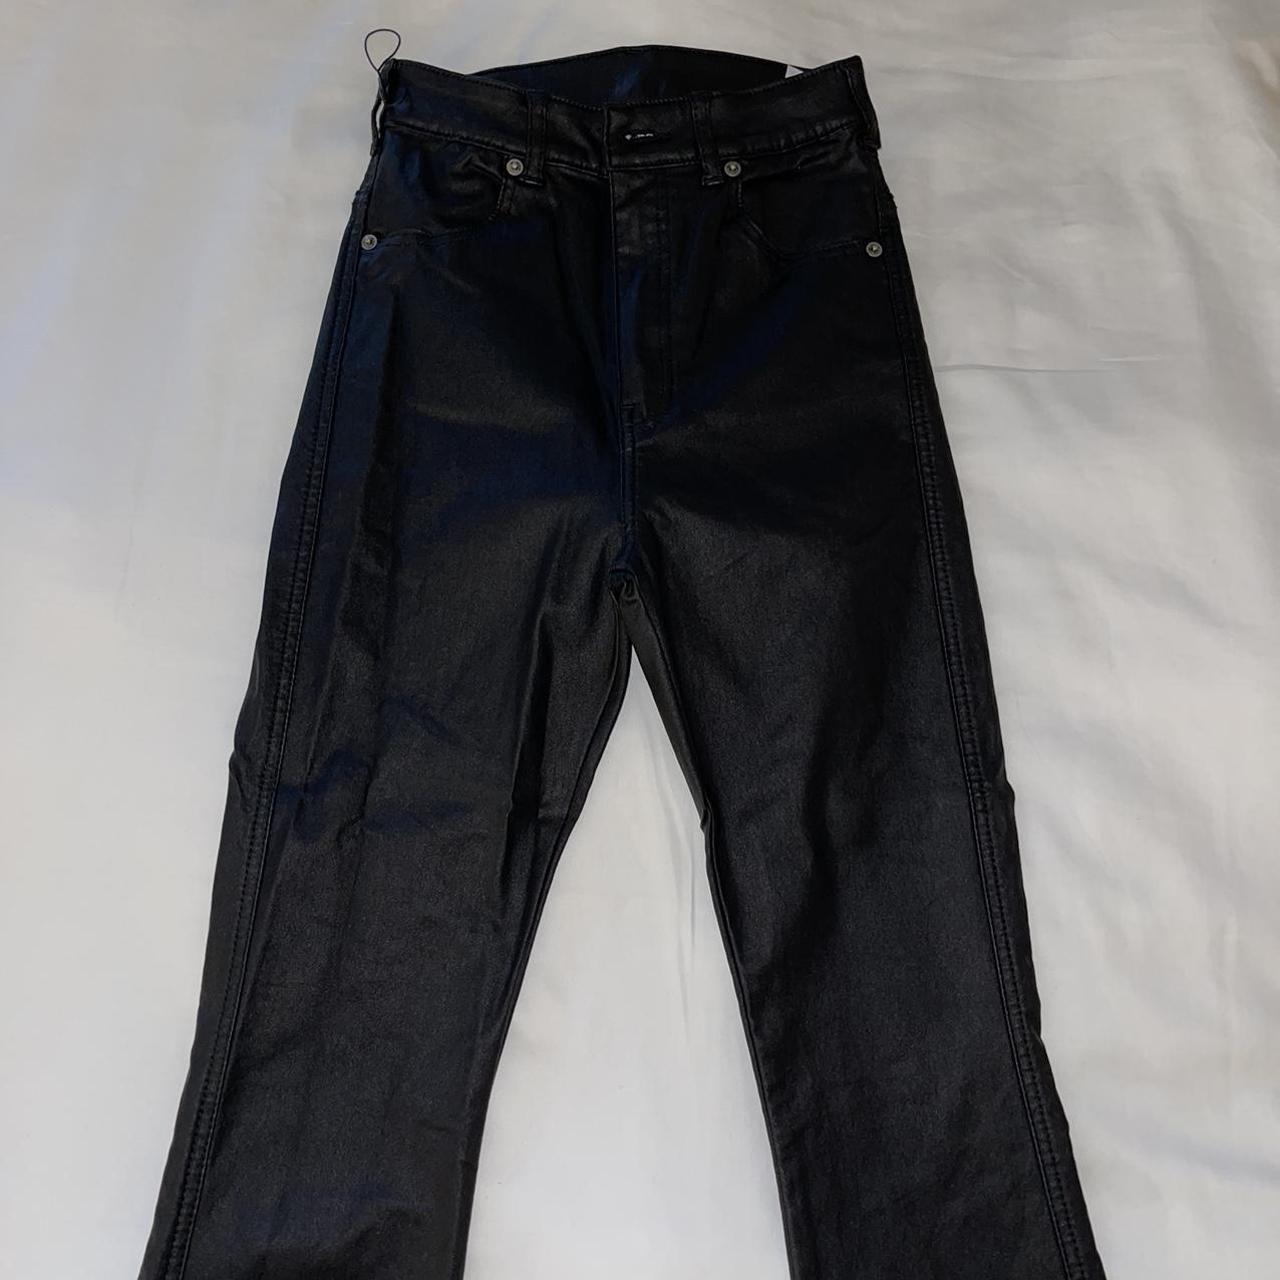 DrDenim moxy flare black metal leather jeans, bought... - Depop